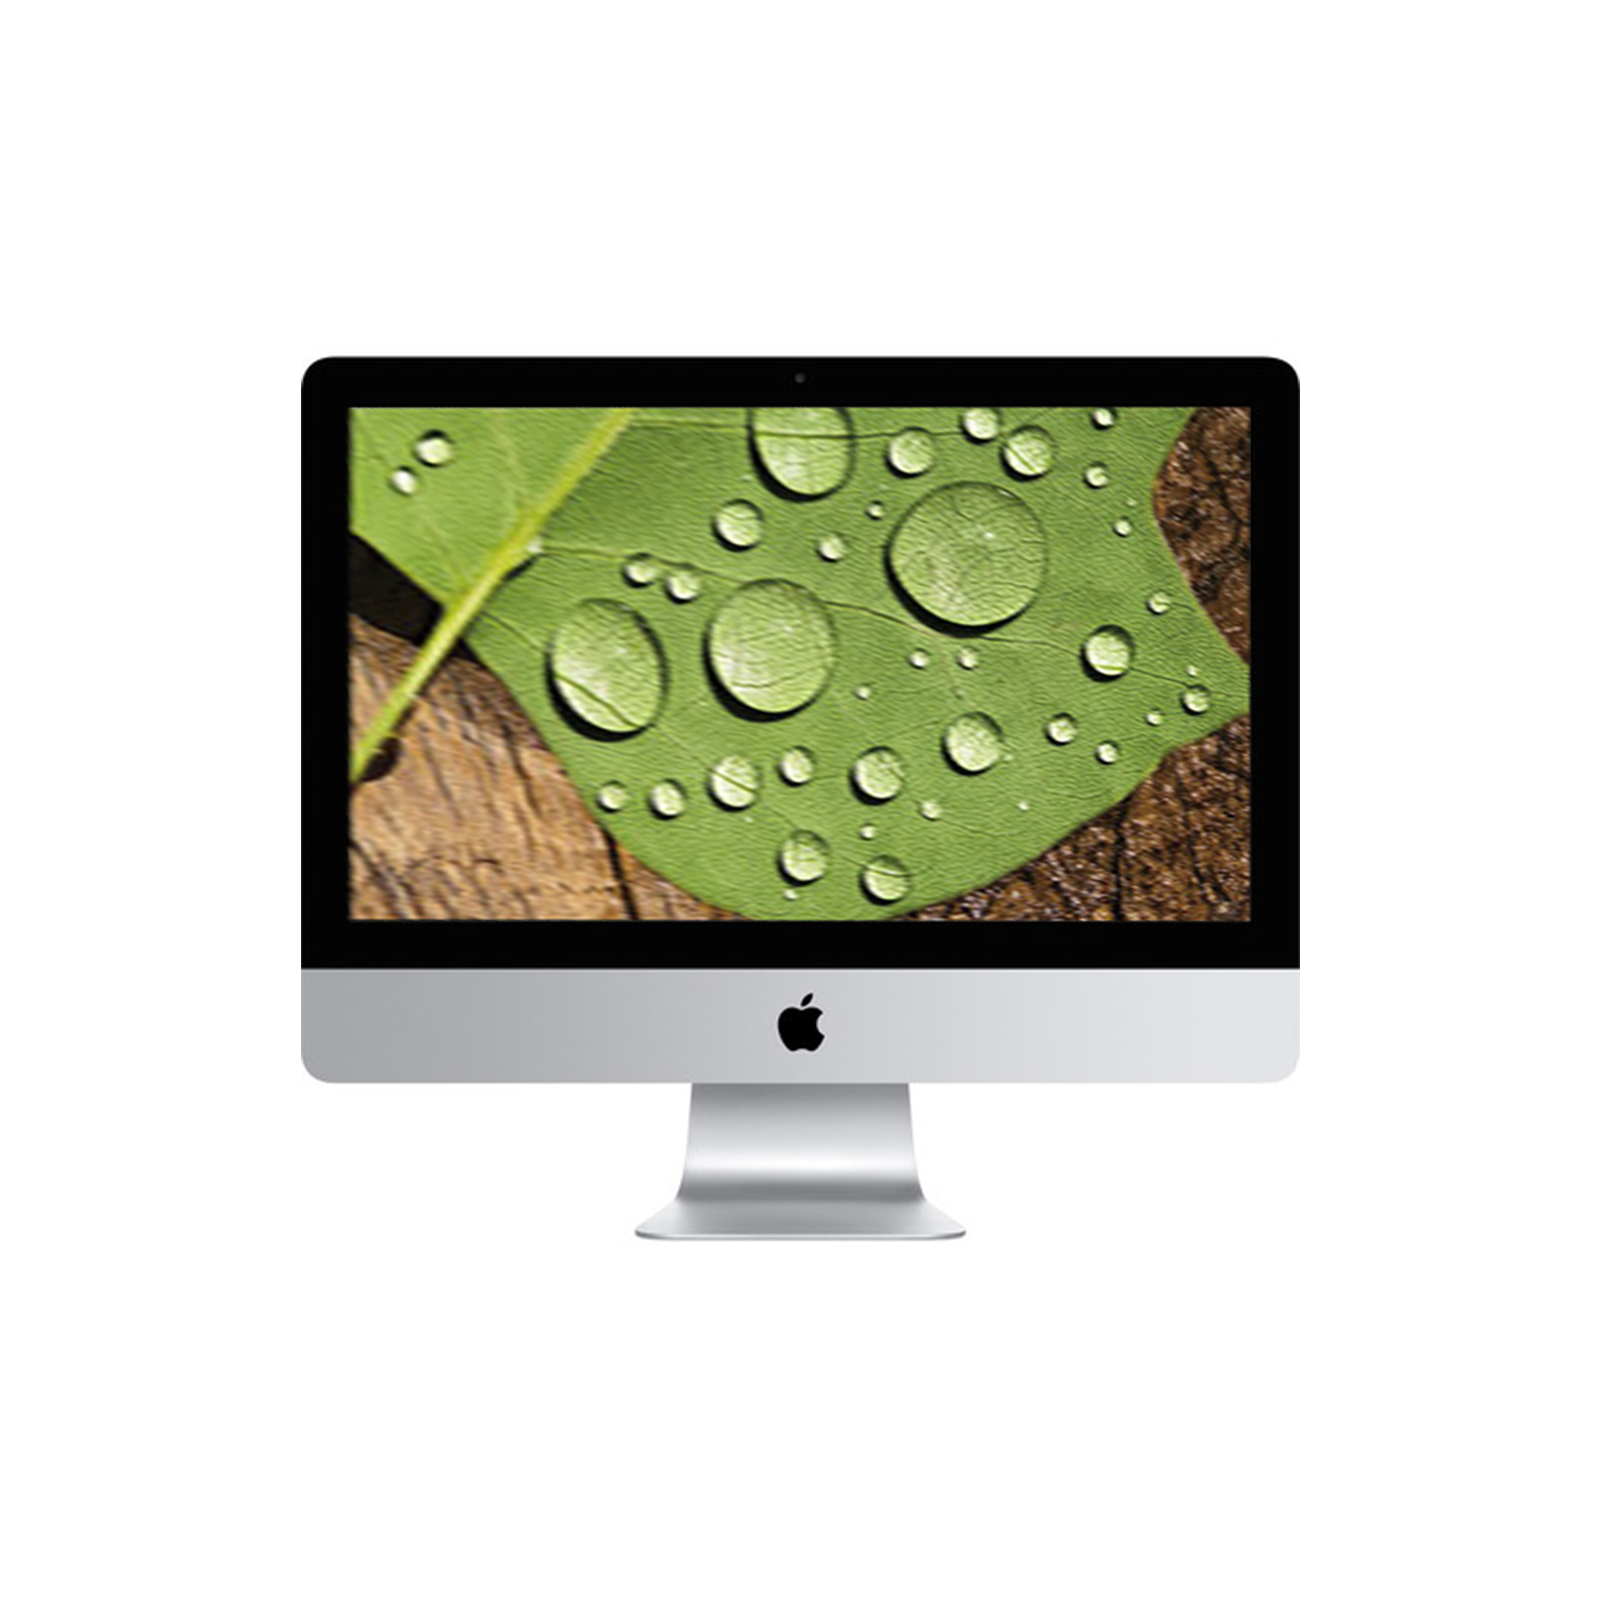 iMac 21.5" Late 2015 - Core i5 1.6Ghz / 8GB RAM / 1TB HDD